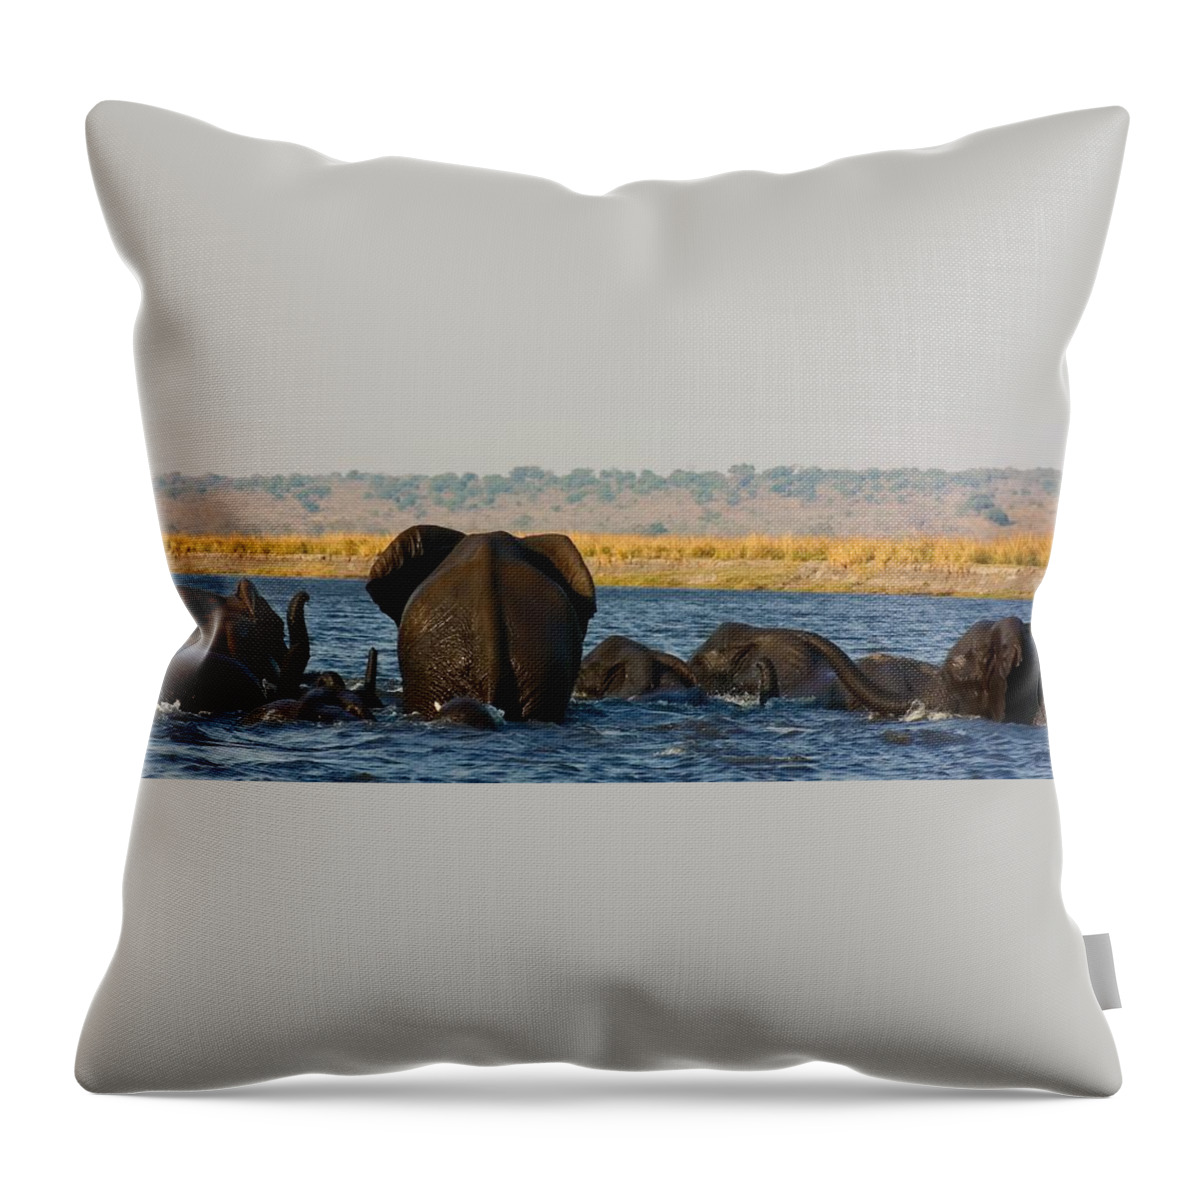 Elephants Throw Pillow featuring the photograph Kalahari Elephants Crossing Chobe River #1 by Amanda Stadther